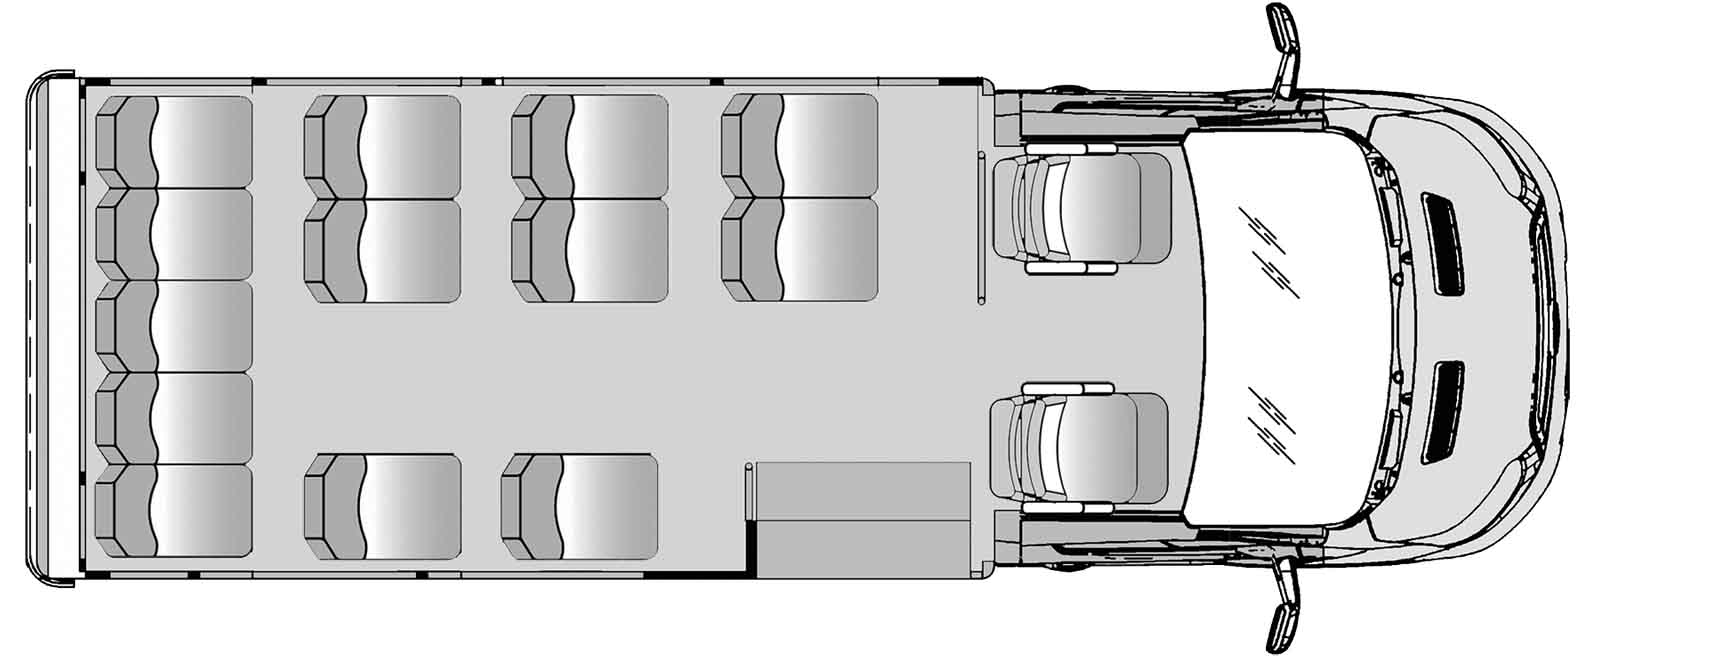 13 Passenger Plus Driver And Copilot Floorplan Image